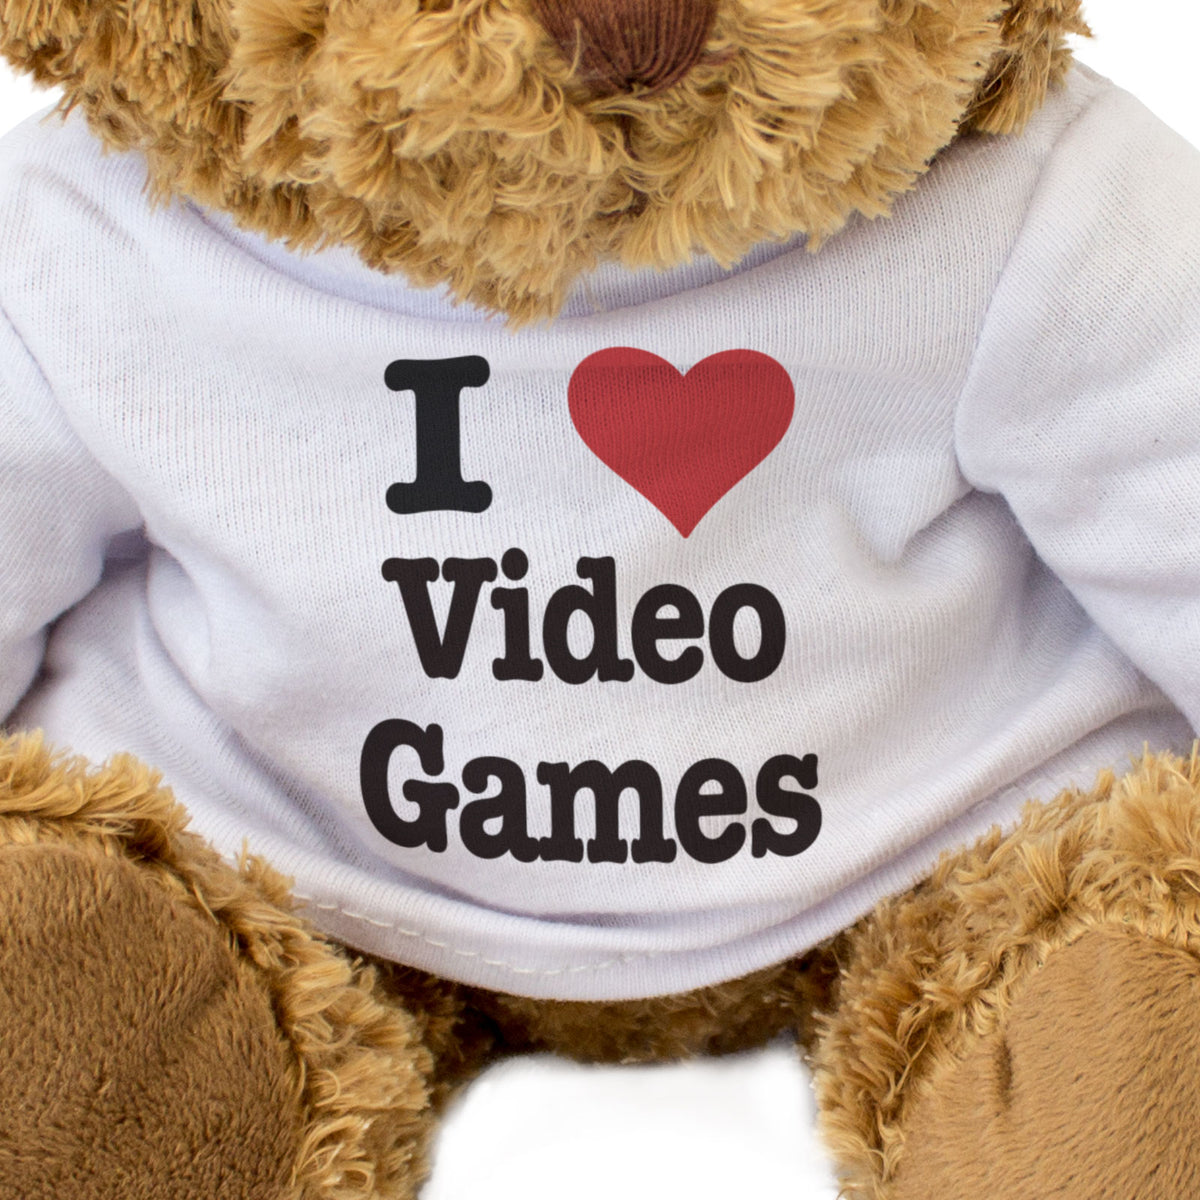 I Love Video Games - Teddy Bear